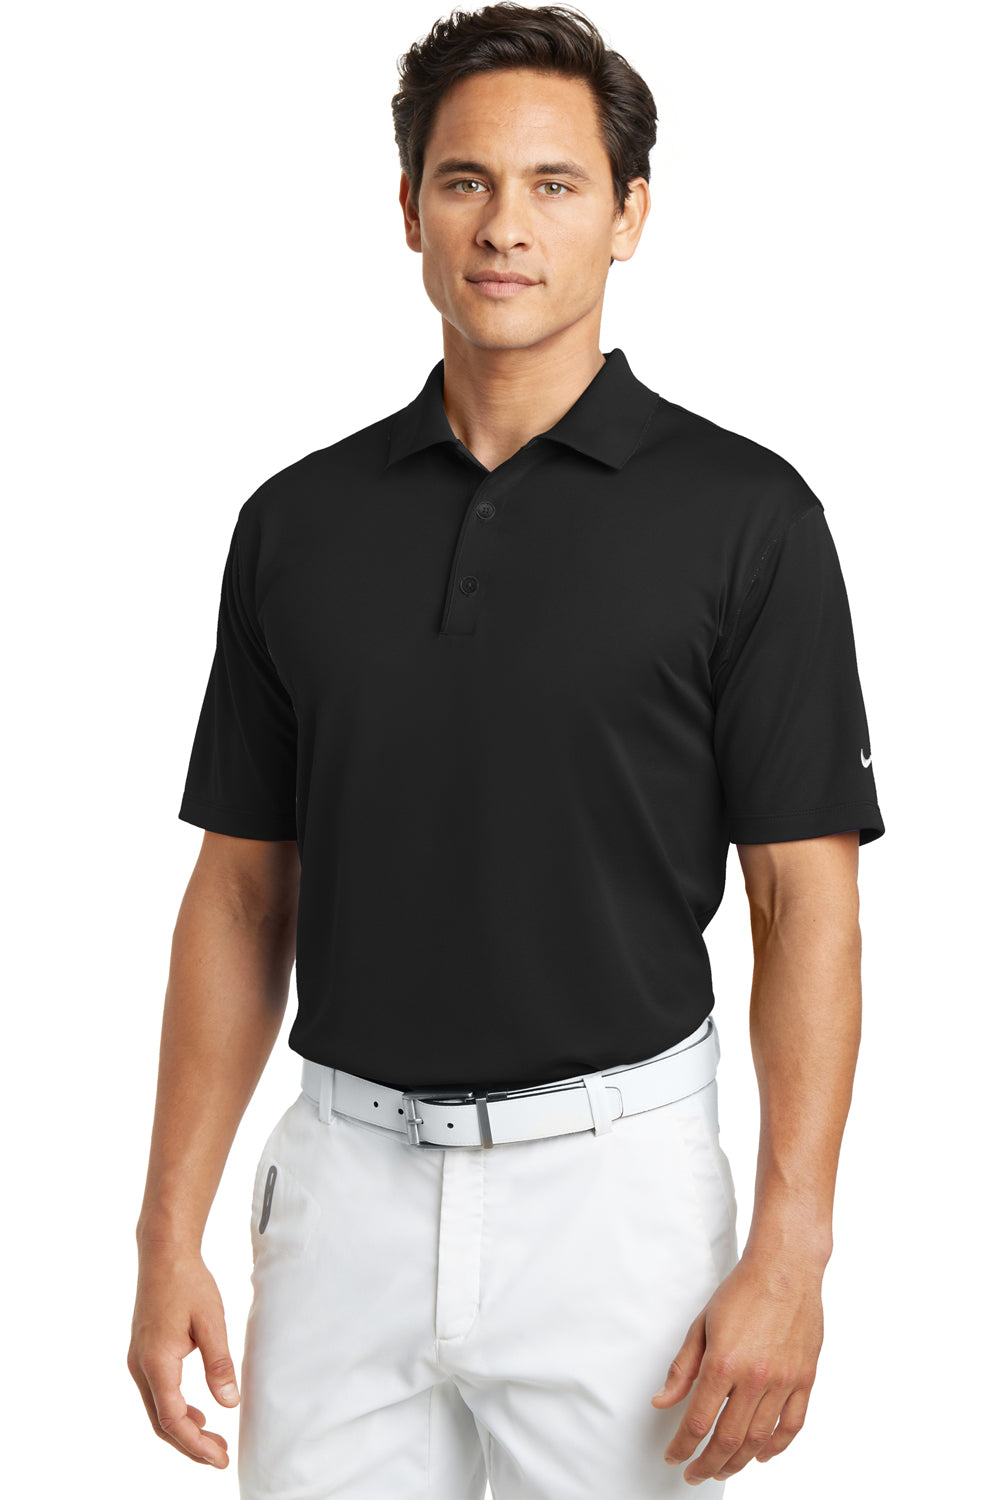 Nike 203690 Mens Tech Basic Dri-Fit Moisture Wicking Short Sleeve Polo Shirt Black Model Front